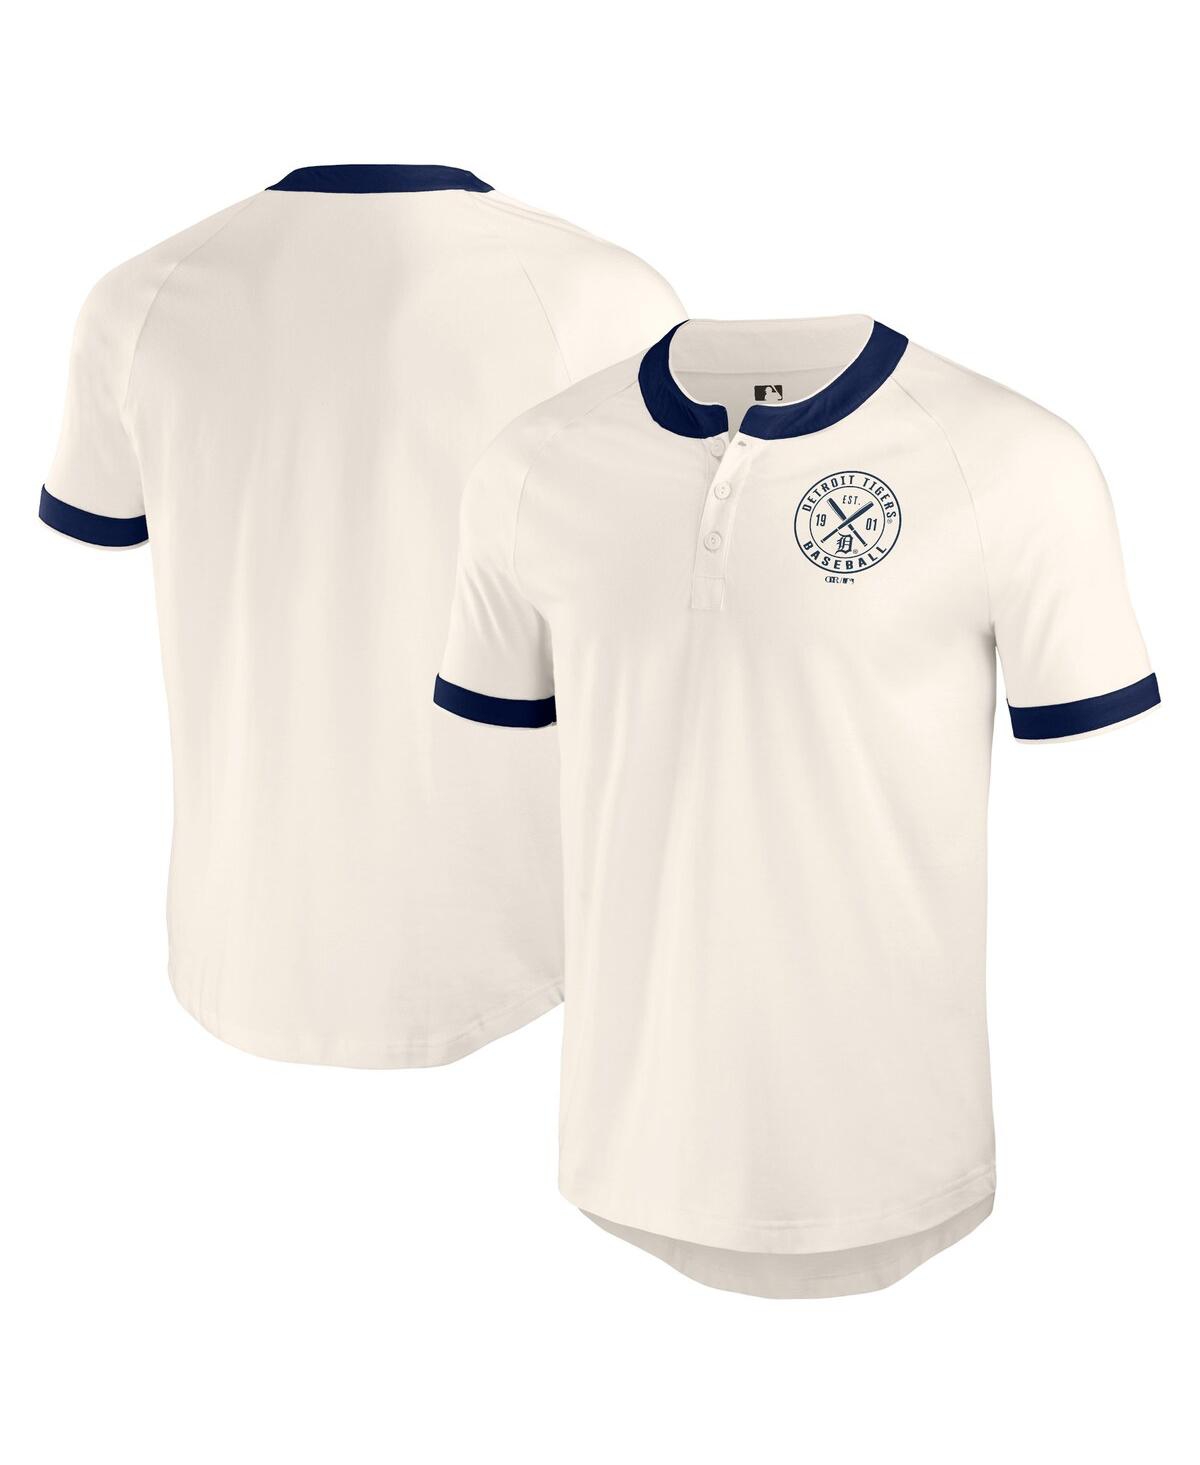 Darius Rucker Men's Collection by Fanatics White Detroit Tigers Henley Raglan T-Shirt - White, Navy